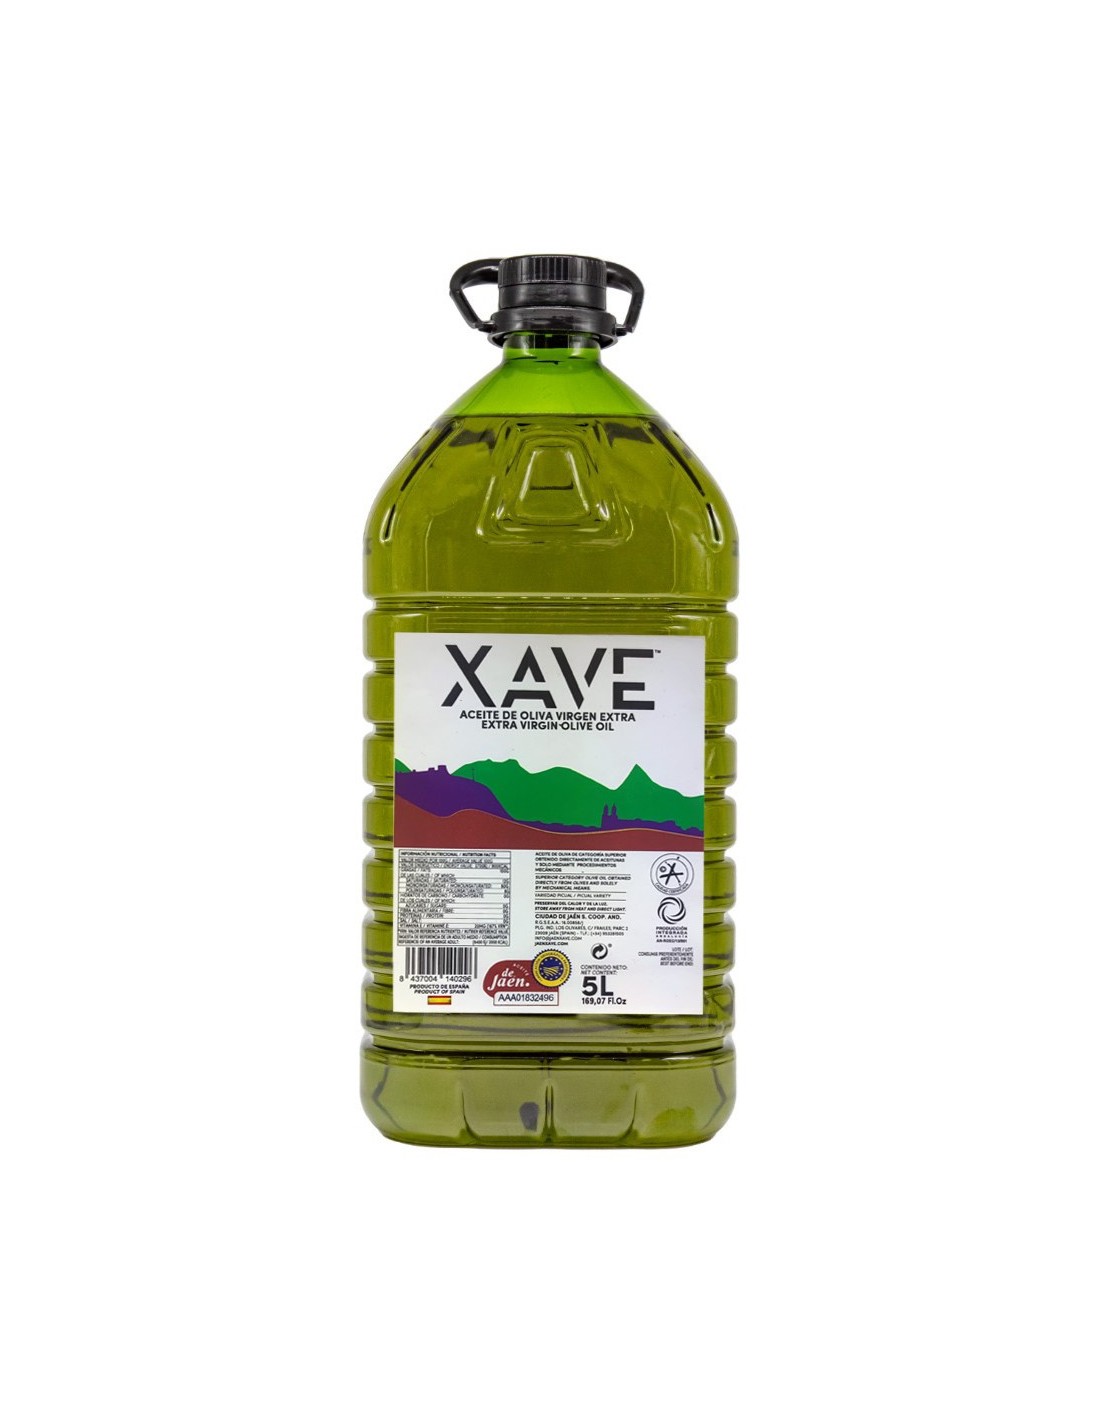 Oliva virgen extra ecológico 5L. (Caja de 3 garrafas)